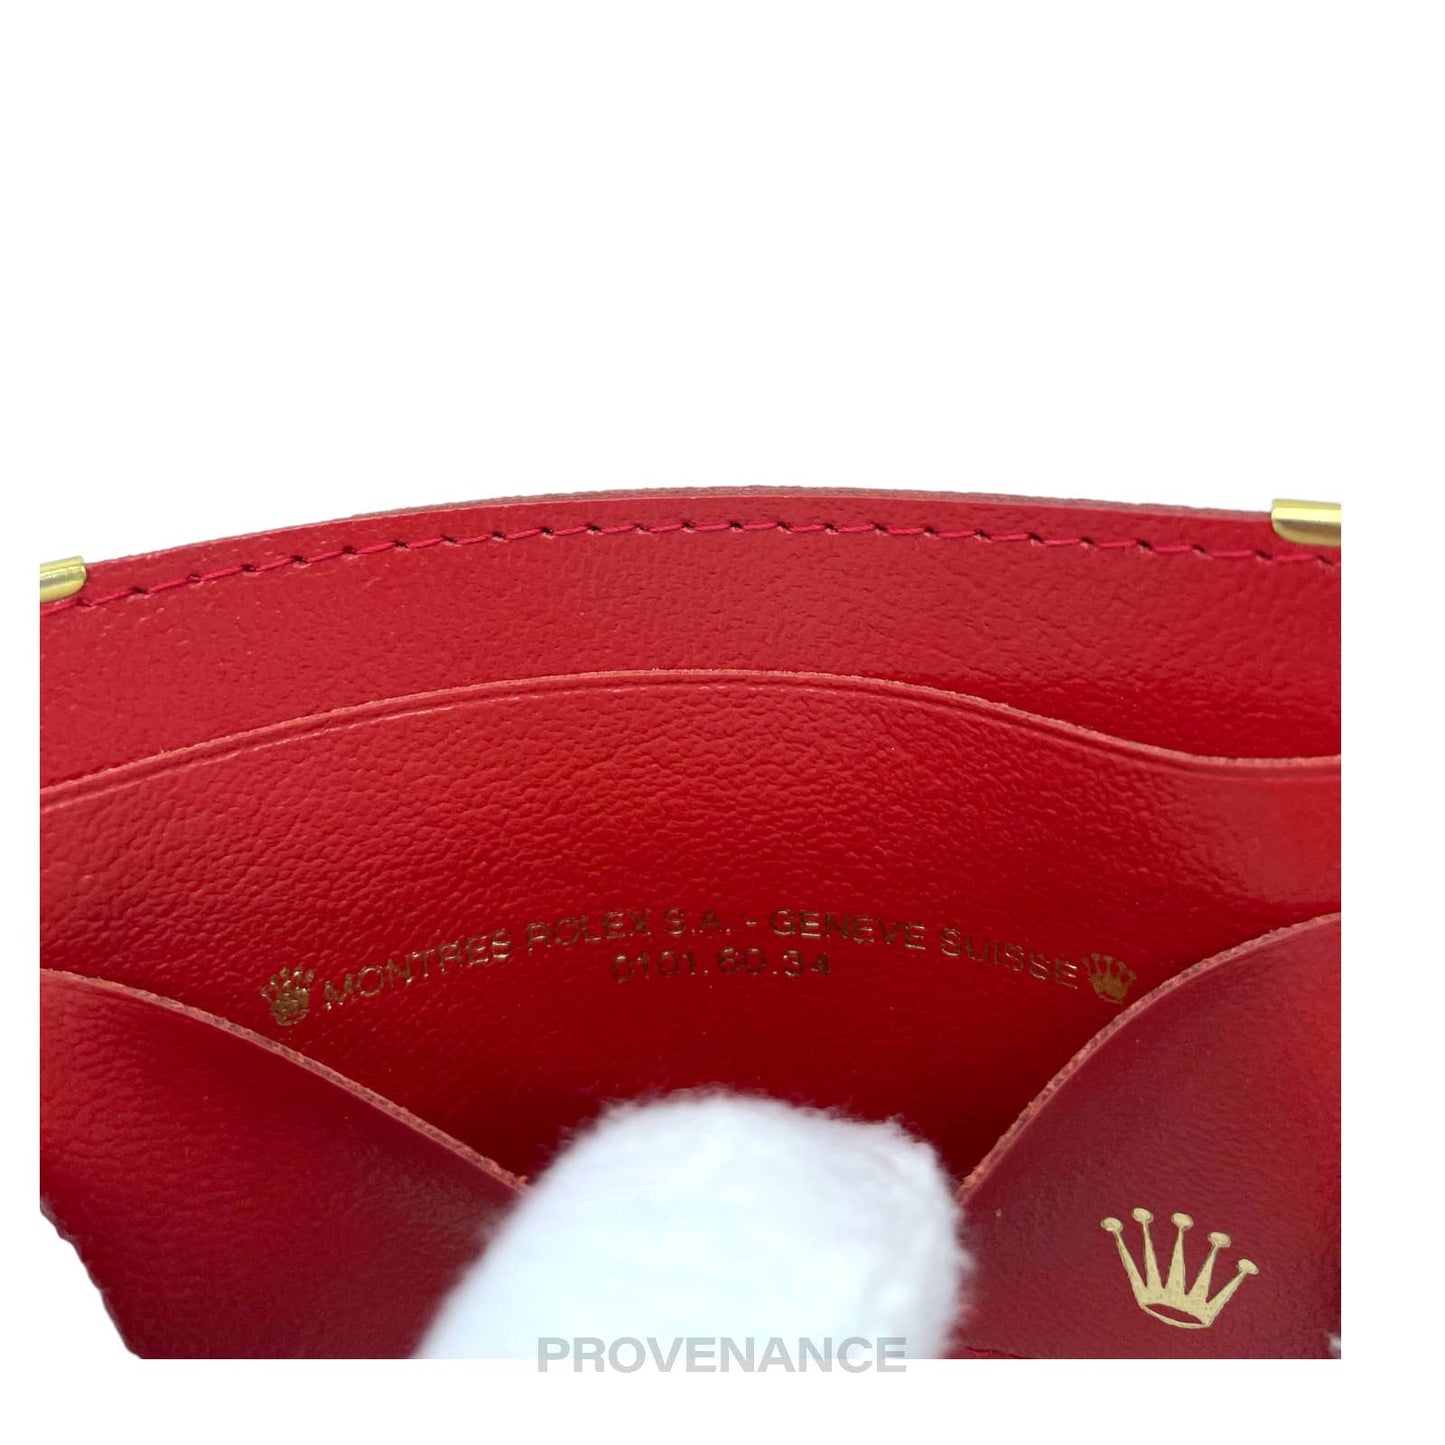 🔴 Rolex Card Holder Wallet - Red Calfskin Leather